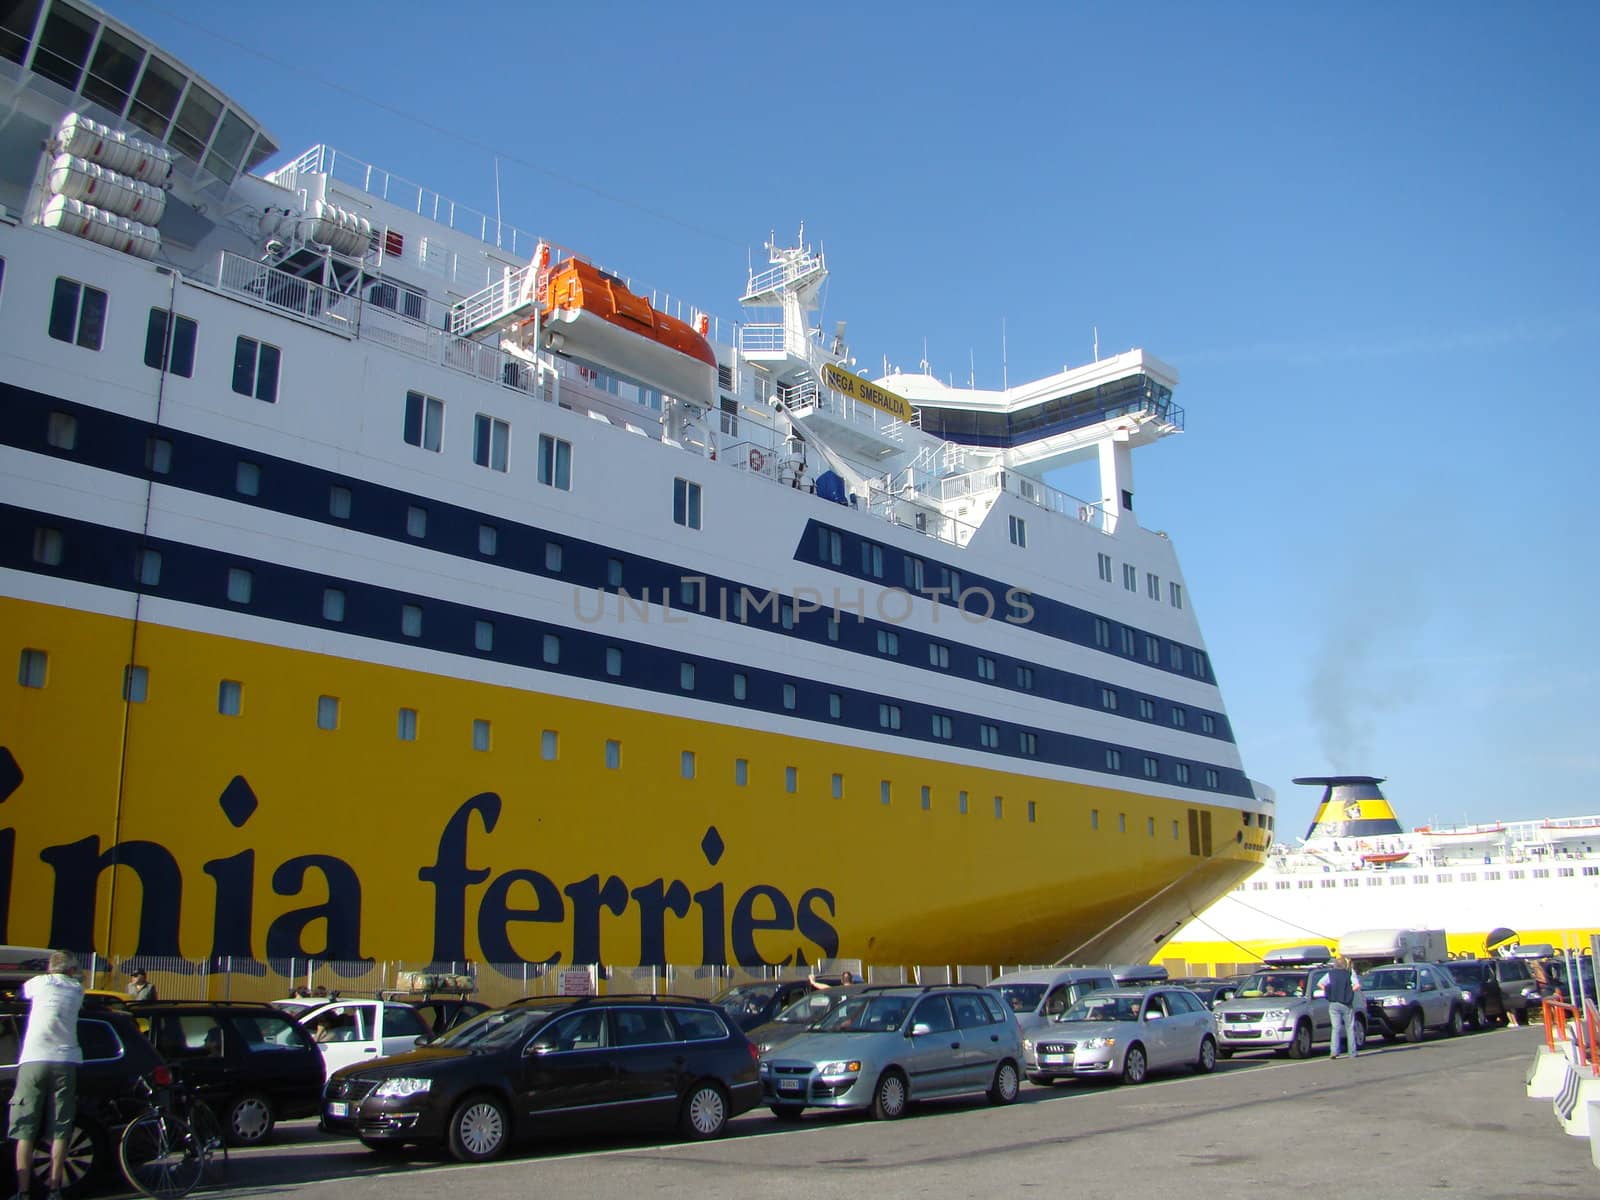 	
queue to ferry in Livorno, Italy.